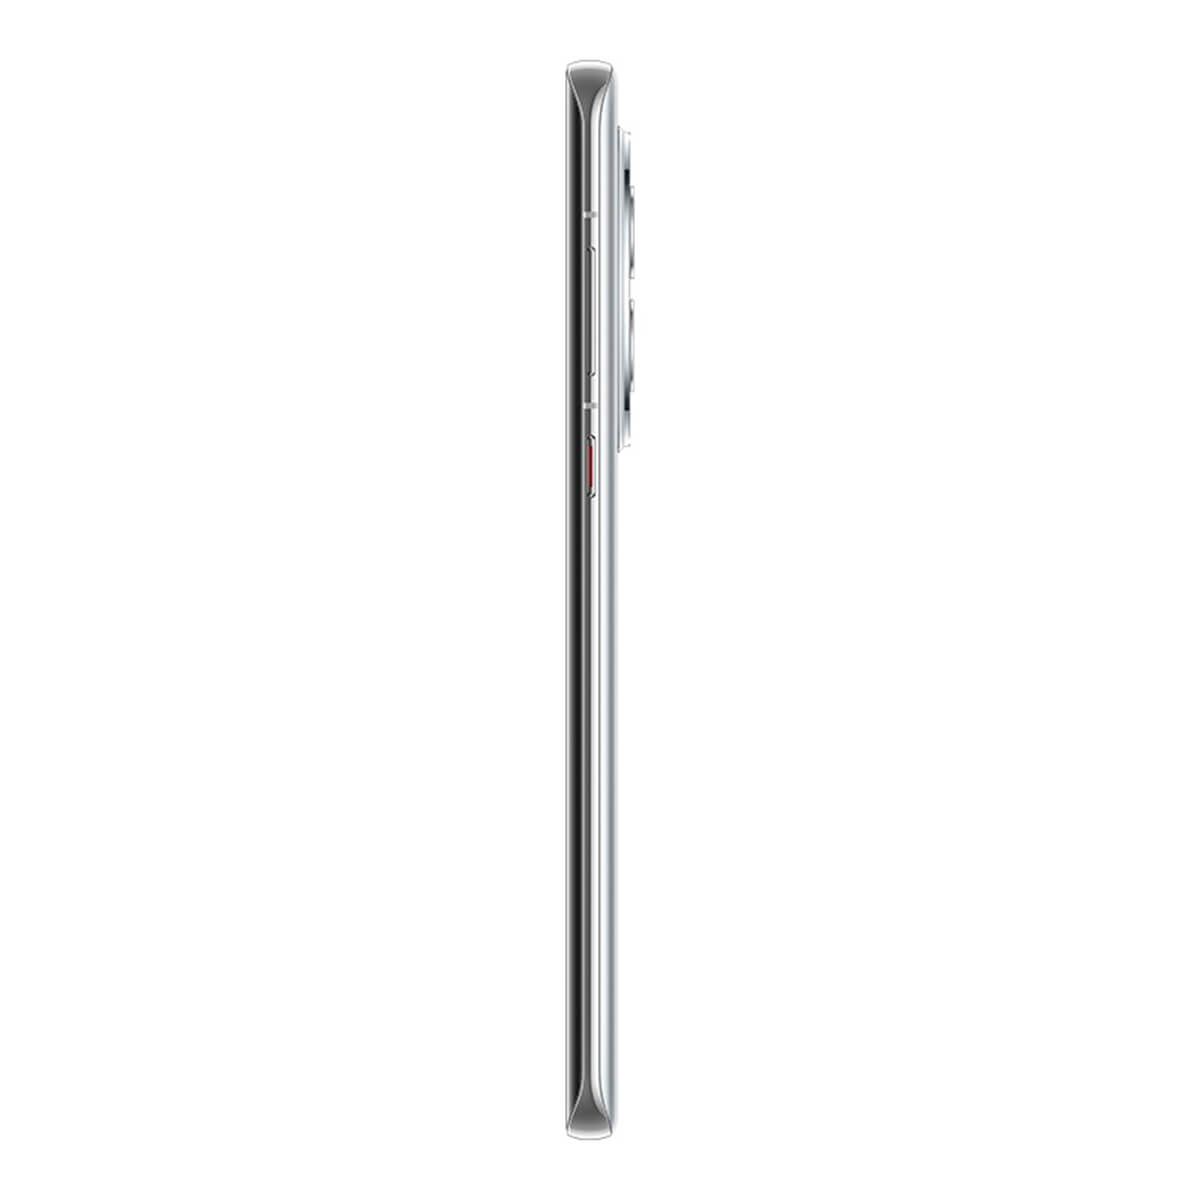 Huawei Mate 50 Pro 8GB/256GB Silver (Silver) Dual SIM DCO-LX9